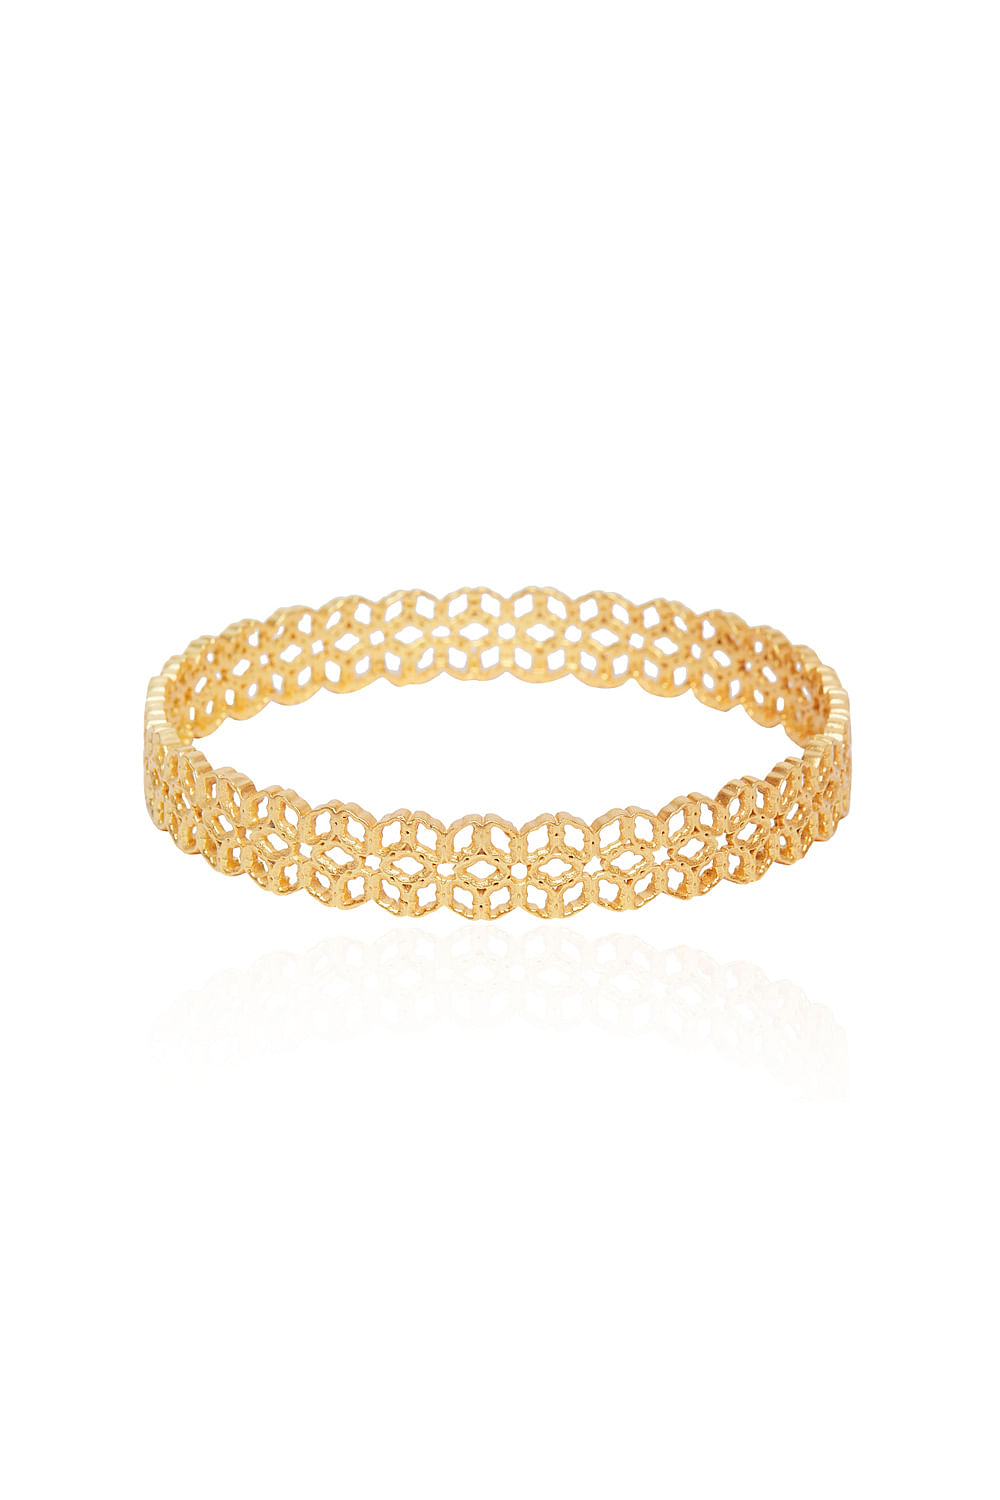 ZARIIN Bangle Bracelets and Cuffs  Buy ZARIIN 22Kt Gold Plated Handcrafted  Ethnic Bracelet Online  Nykaa Fashion